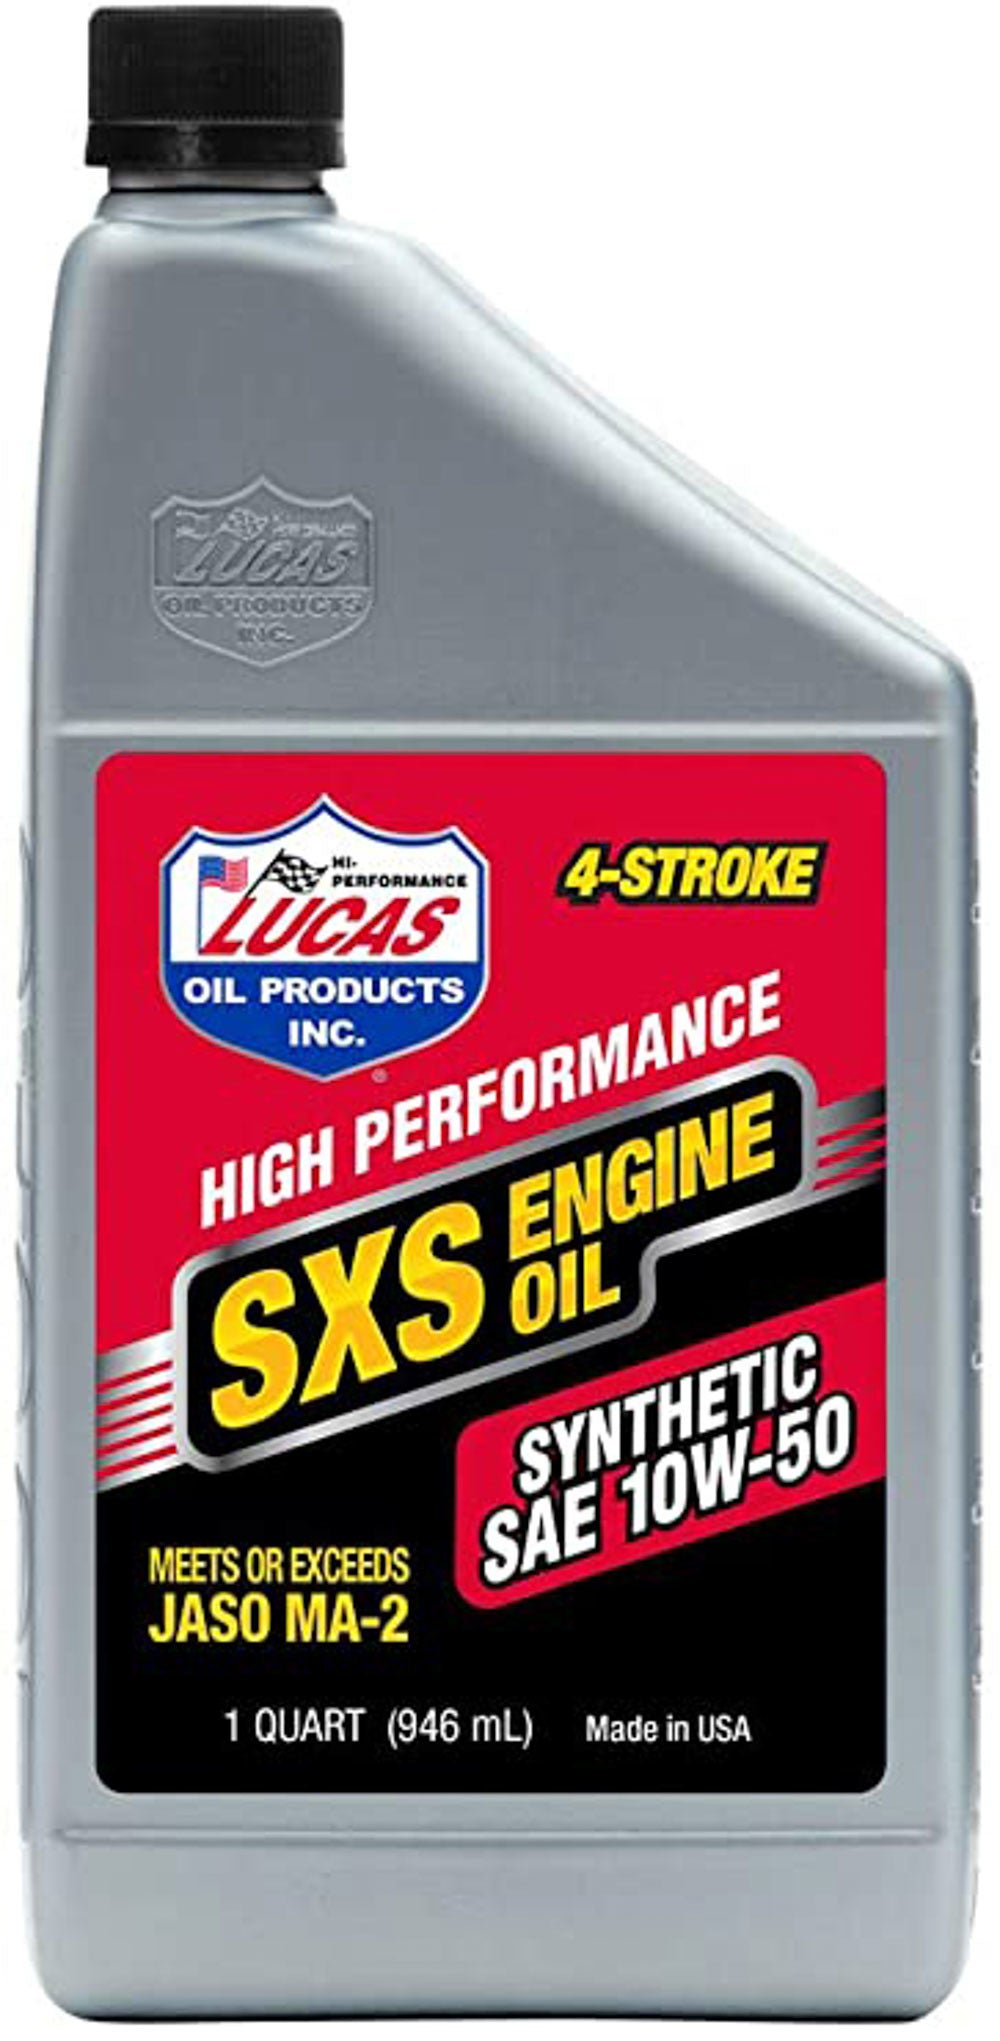 Synthetic 10w50 SXS Oil 1 Quart